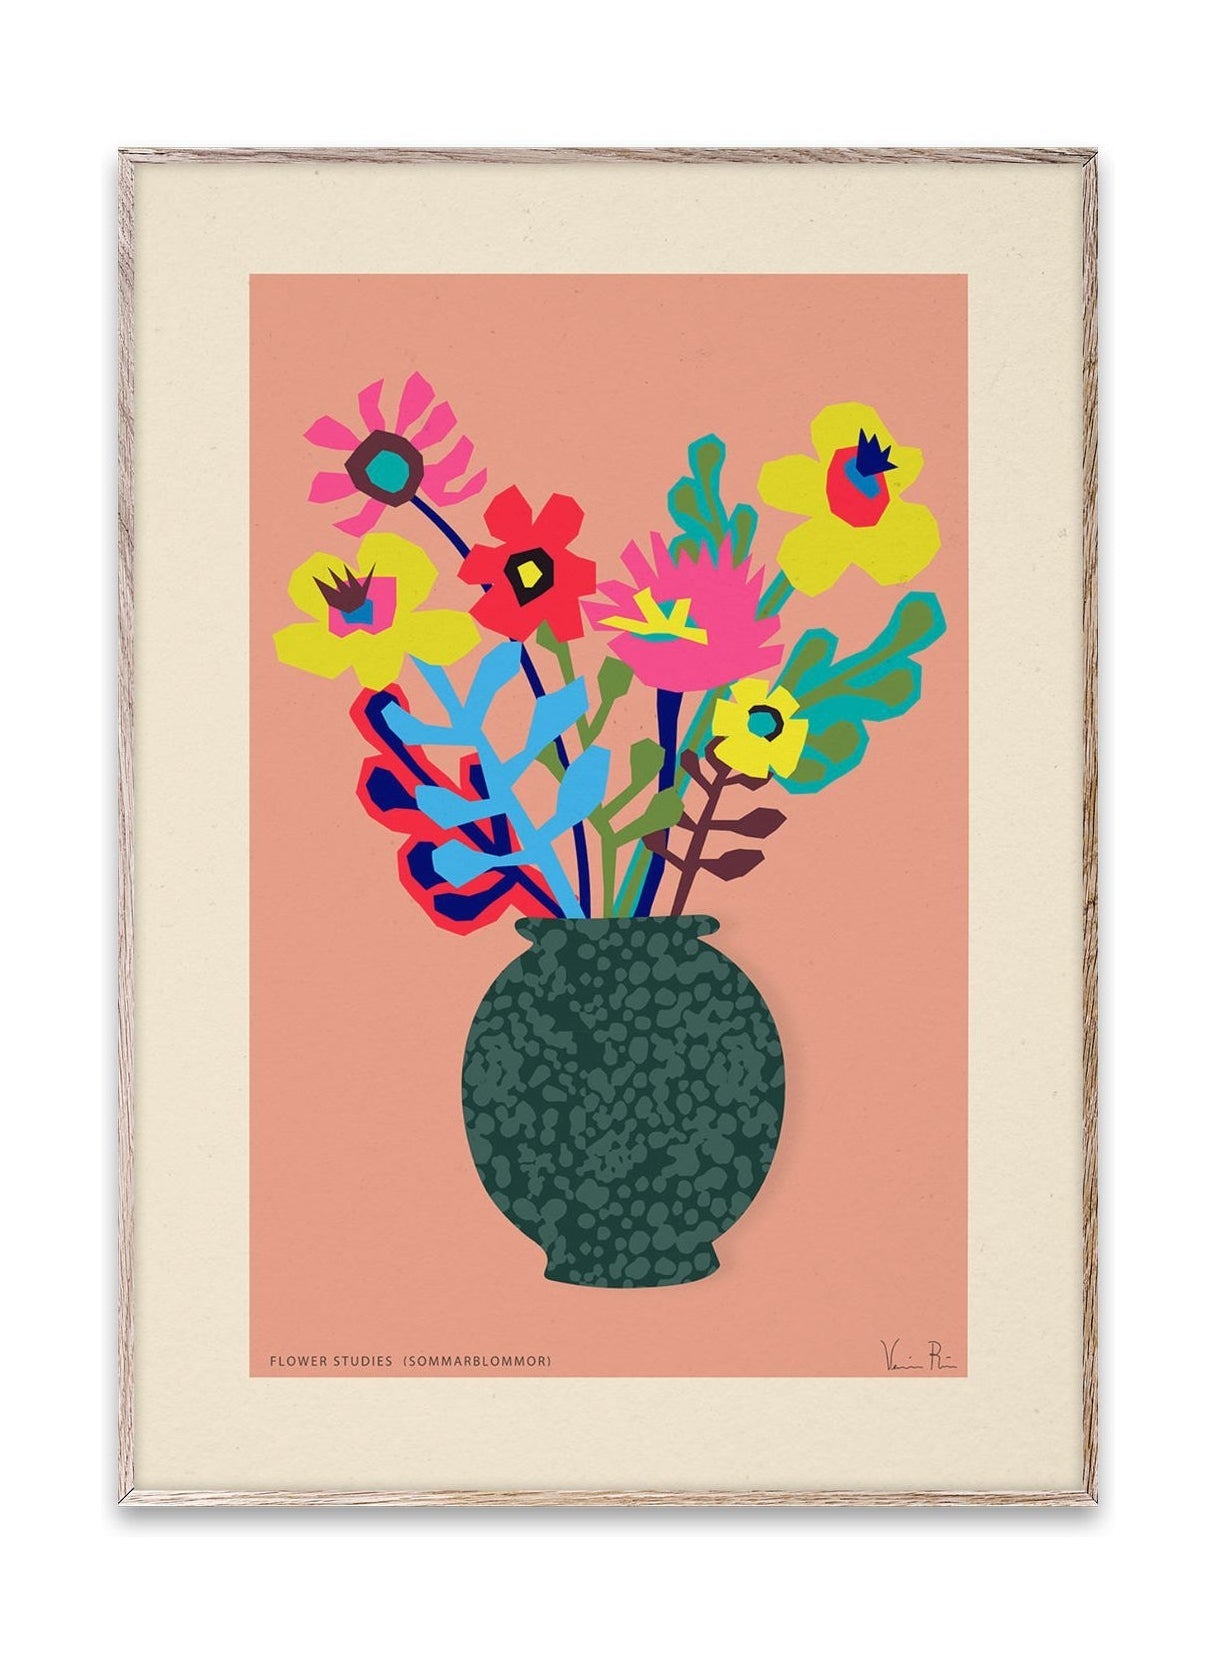 Paper Collective Flower Studies 02 (SomMarblommar) Affiche, 30x40 cm